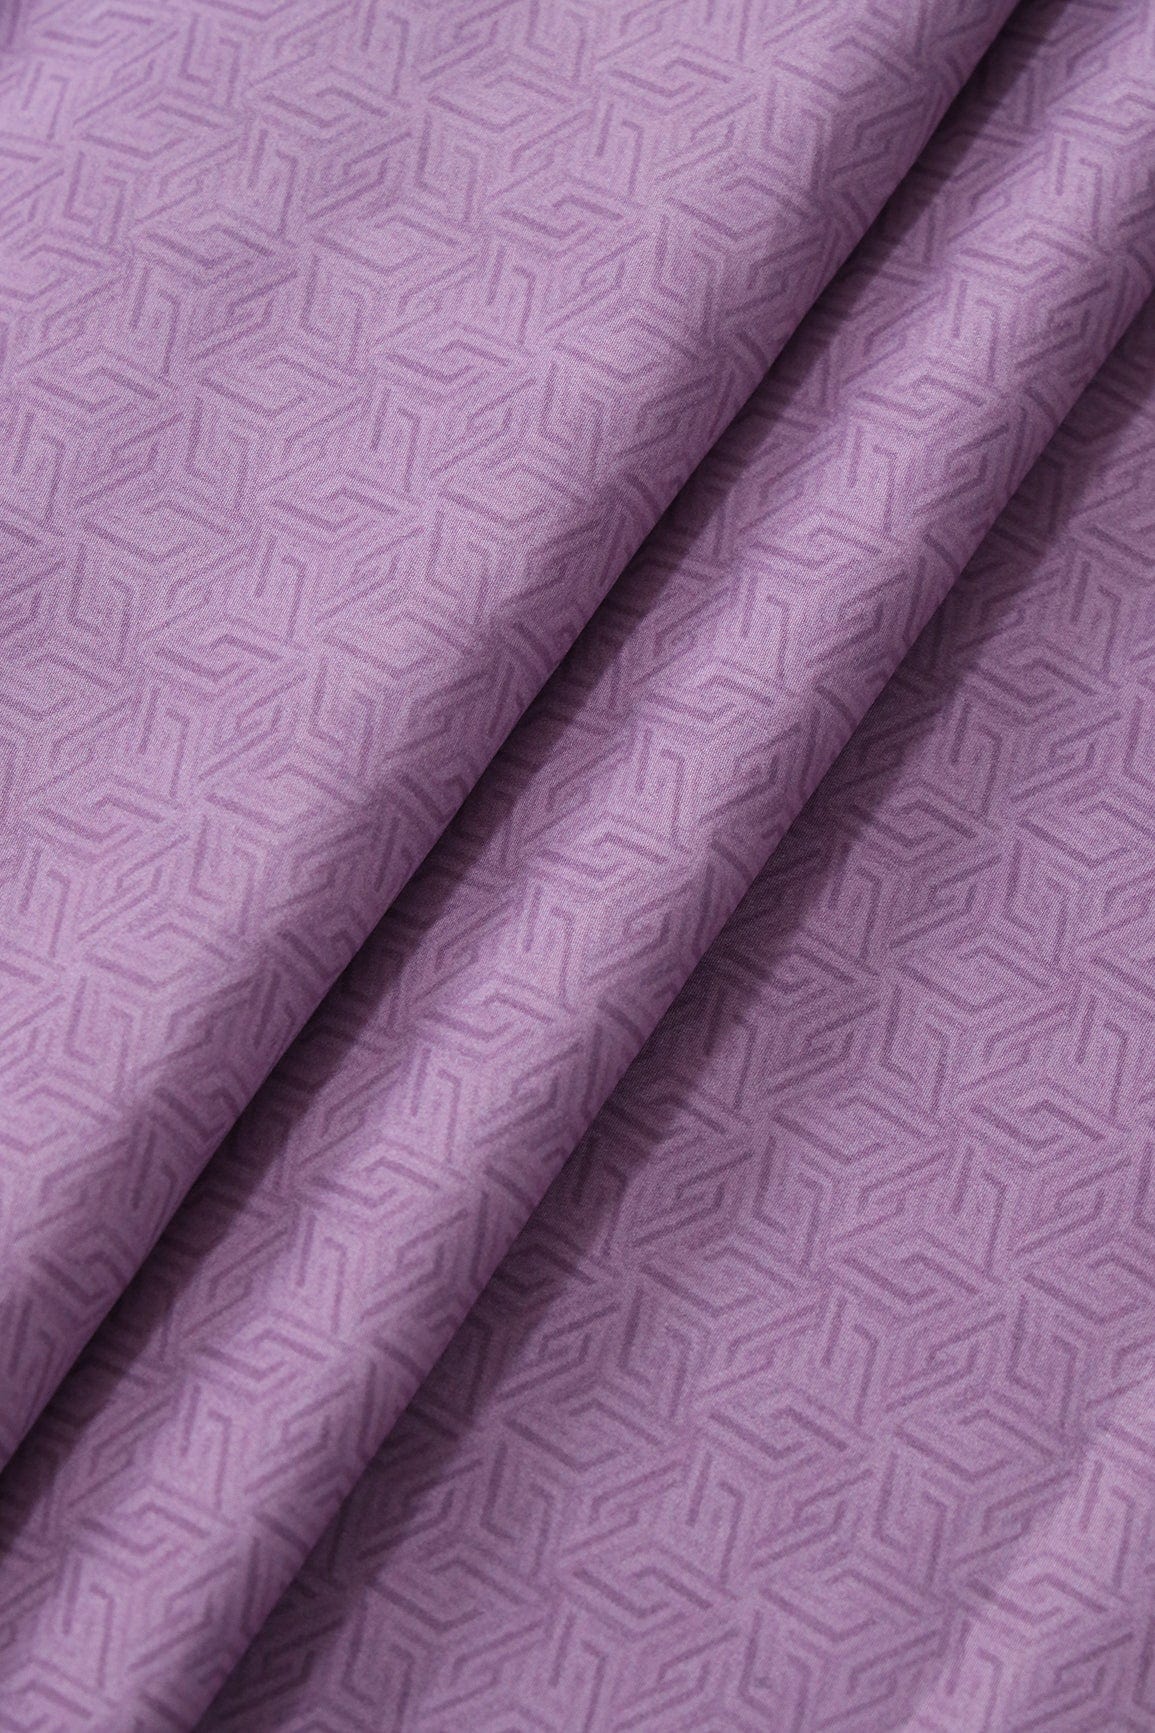 doeraa Prints Lavender Geometric Pattern Digital Print On French Crepe Fabric